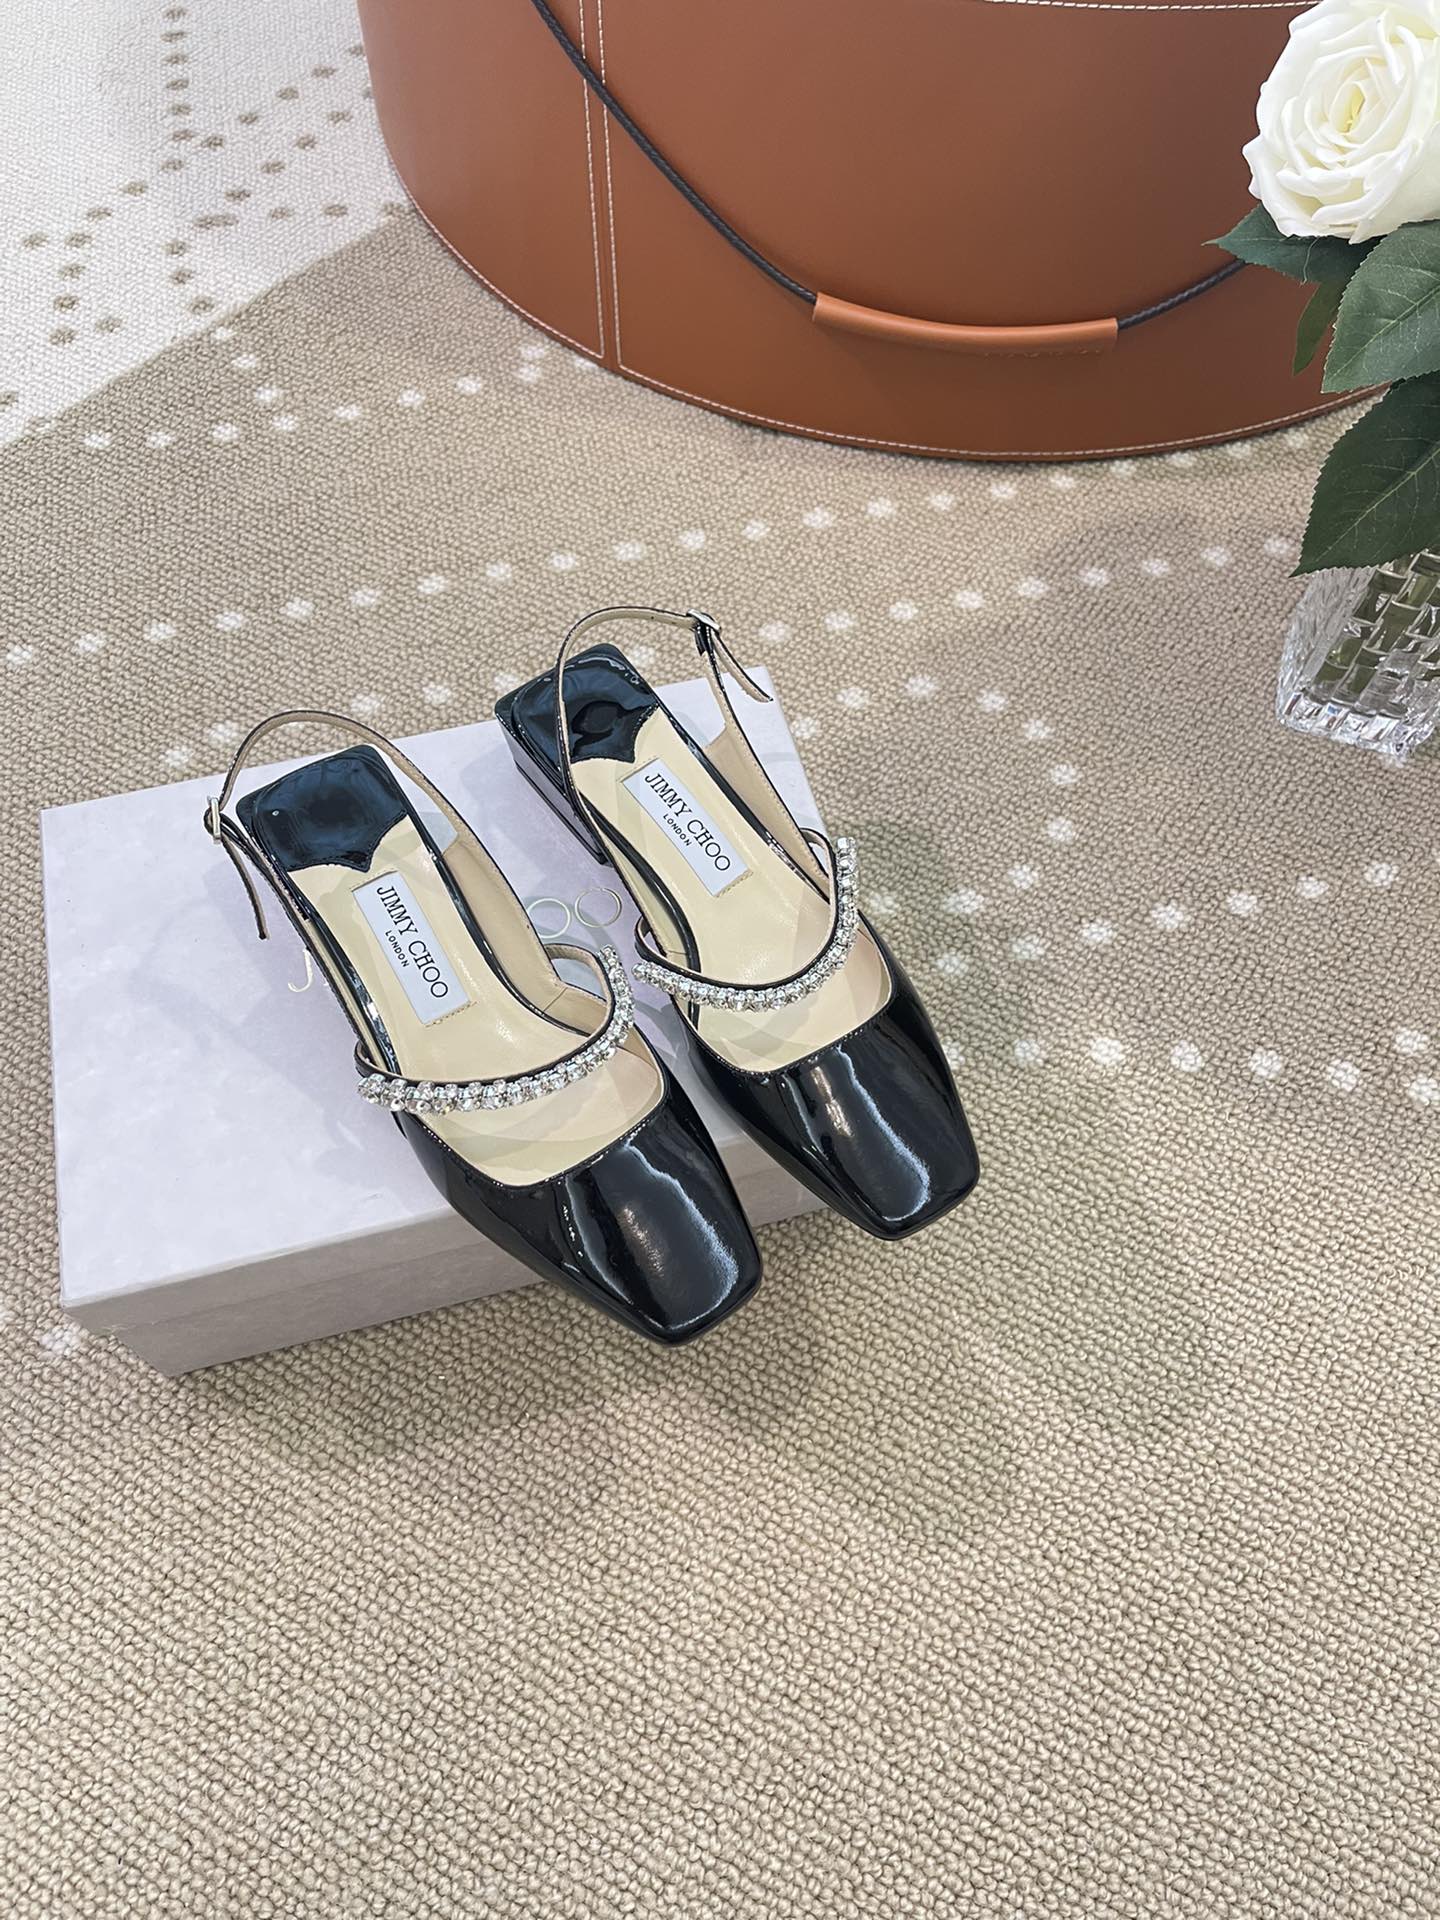 Jimmy Choo Shoes Sandals Genuine Leather Patent Sheepskin